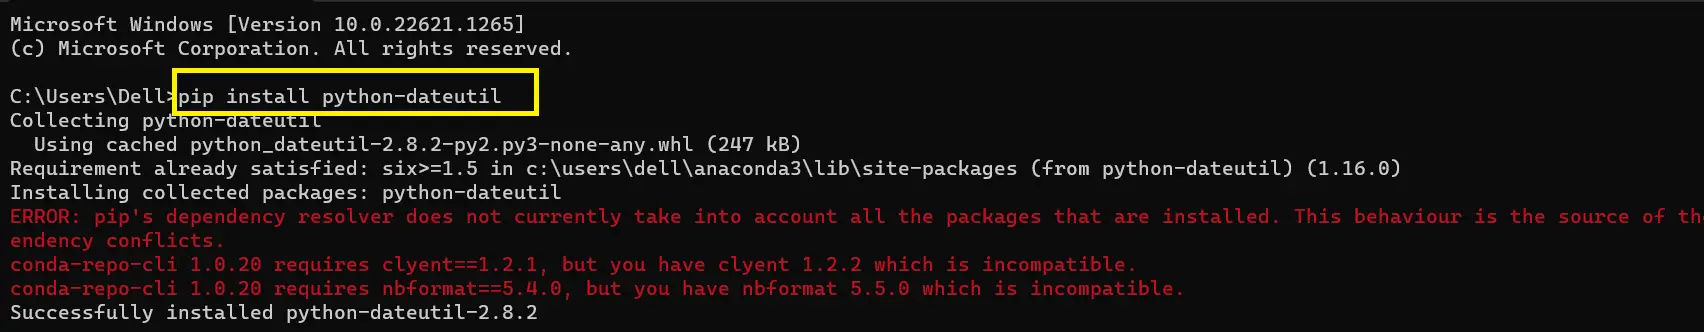 install python dateutil for Modulenotfounderror no module named 'python-dateutil'